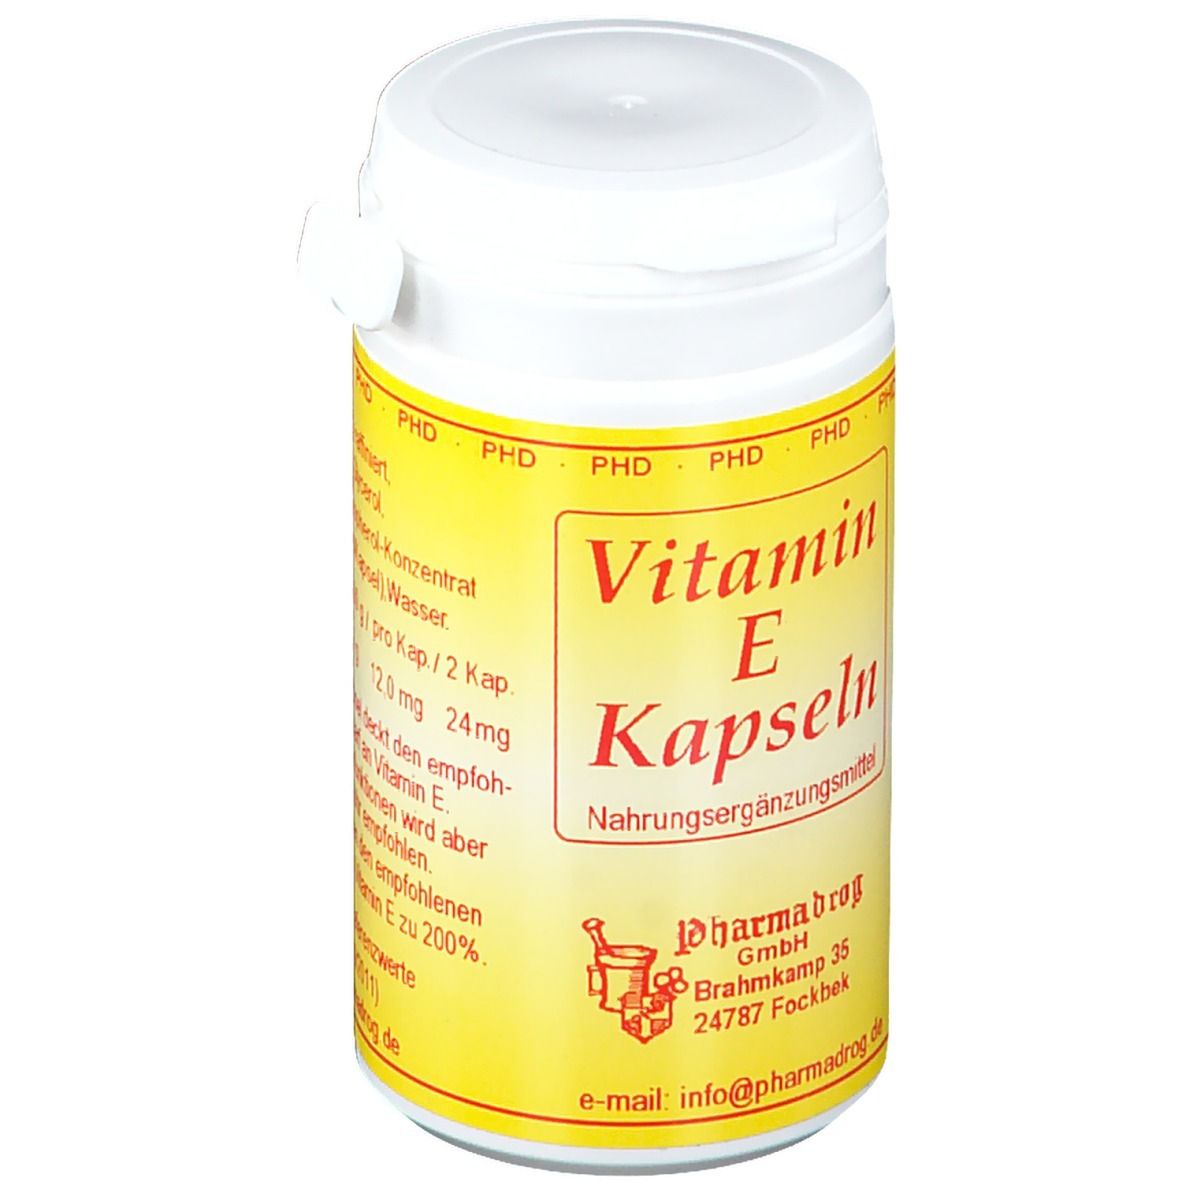 Vitamin E Kapseln